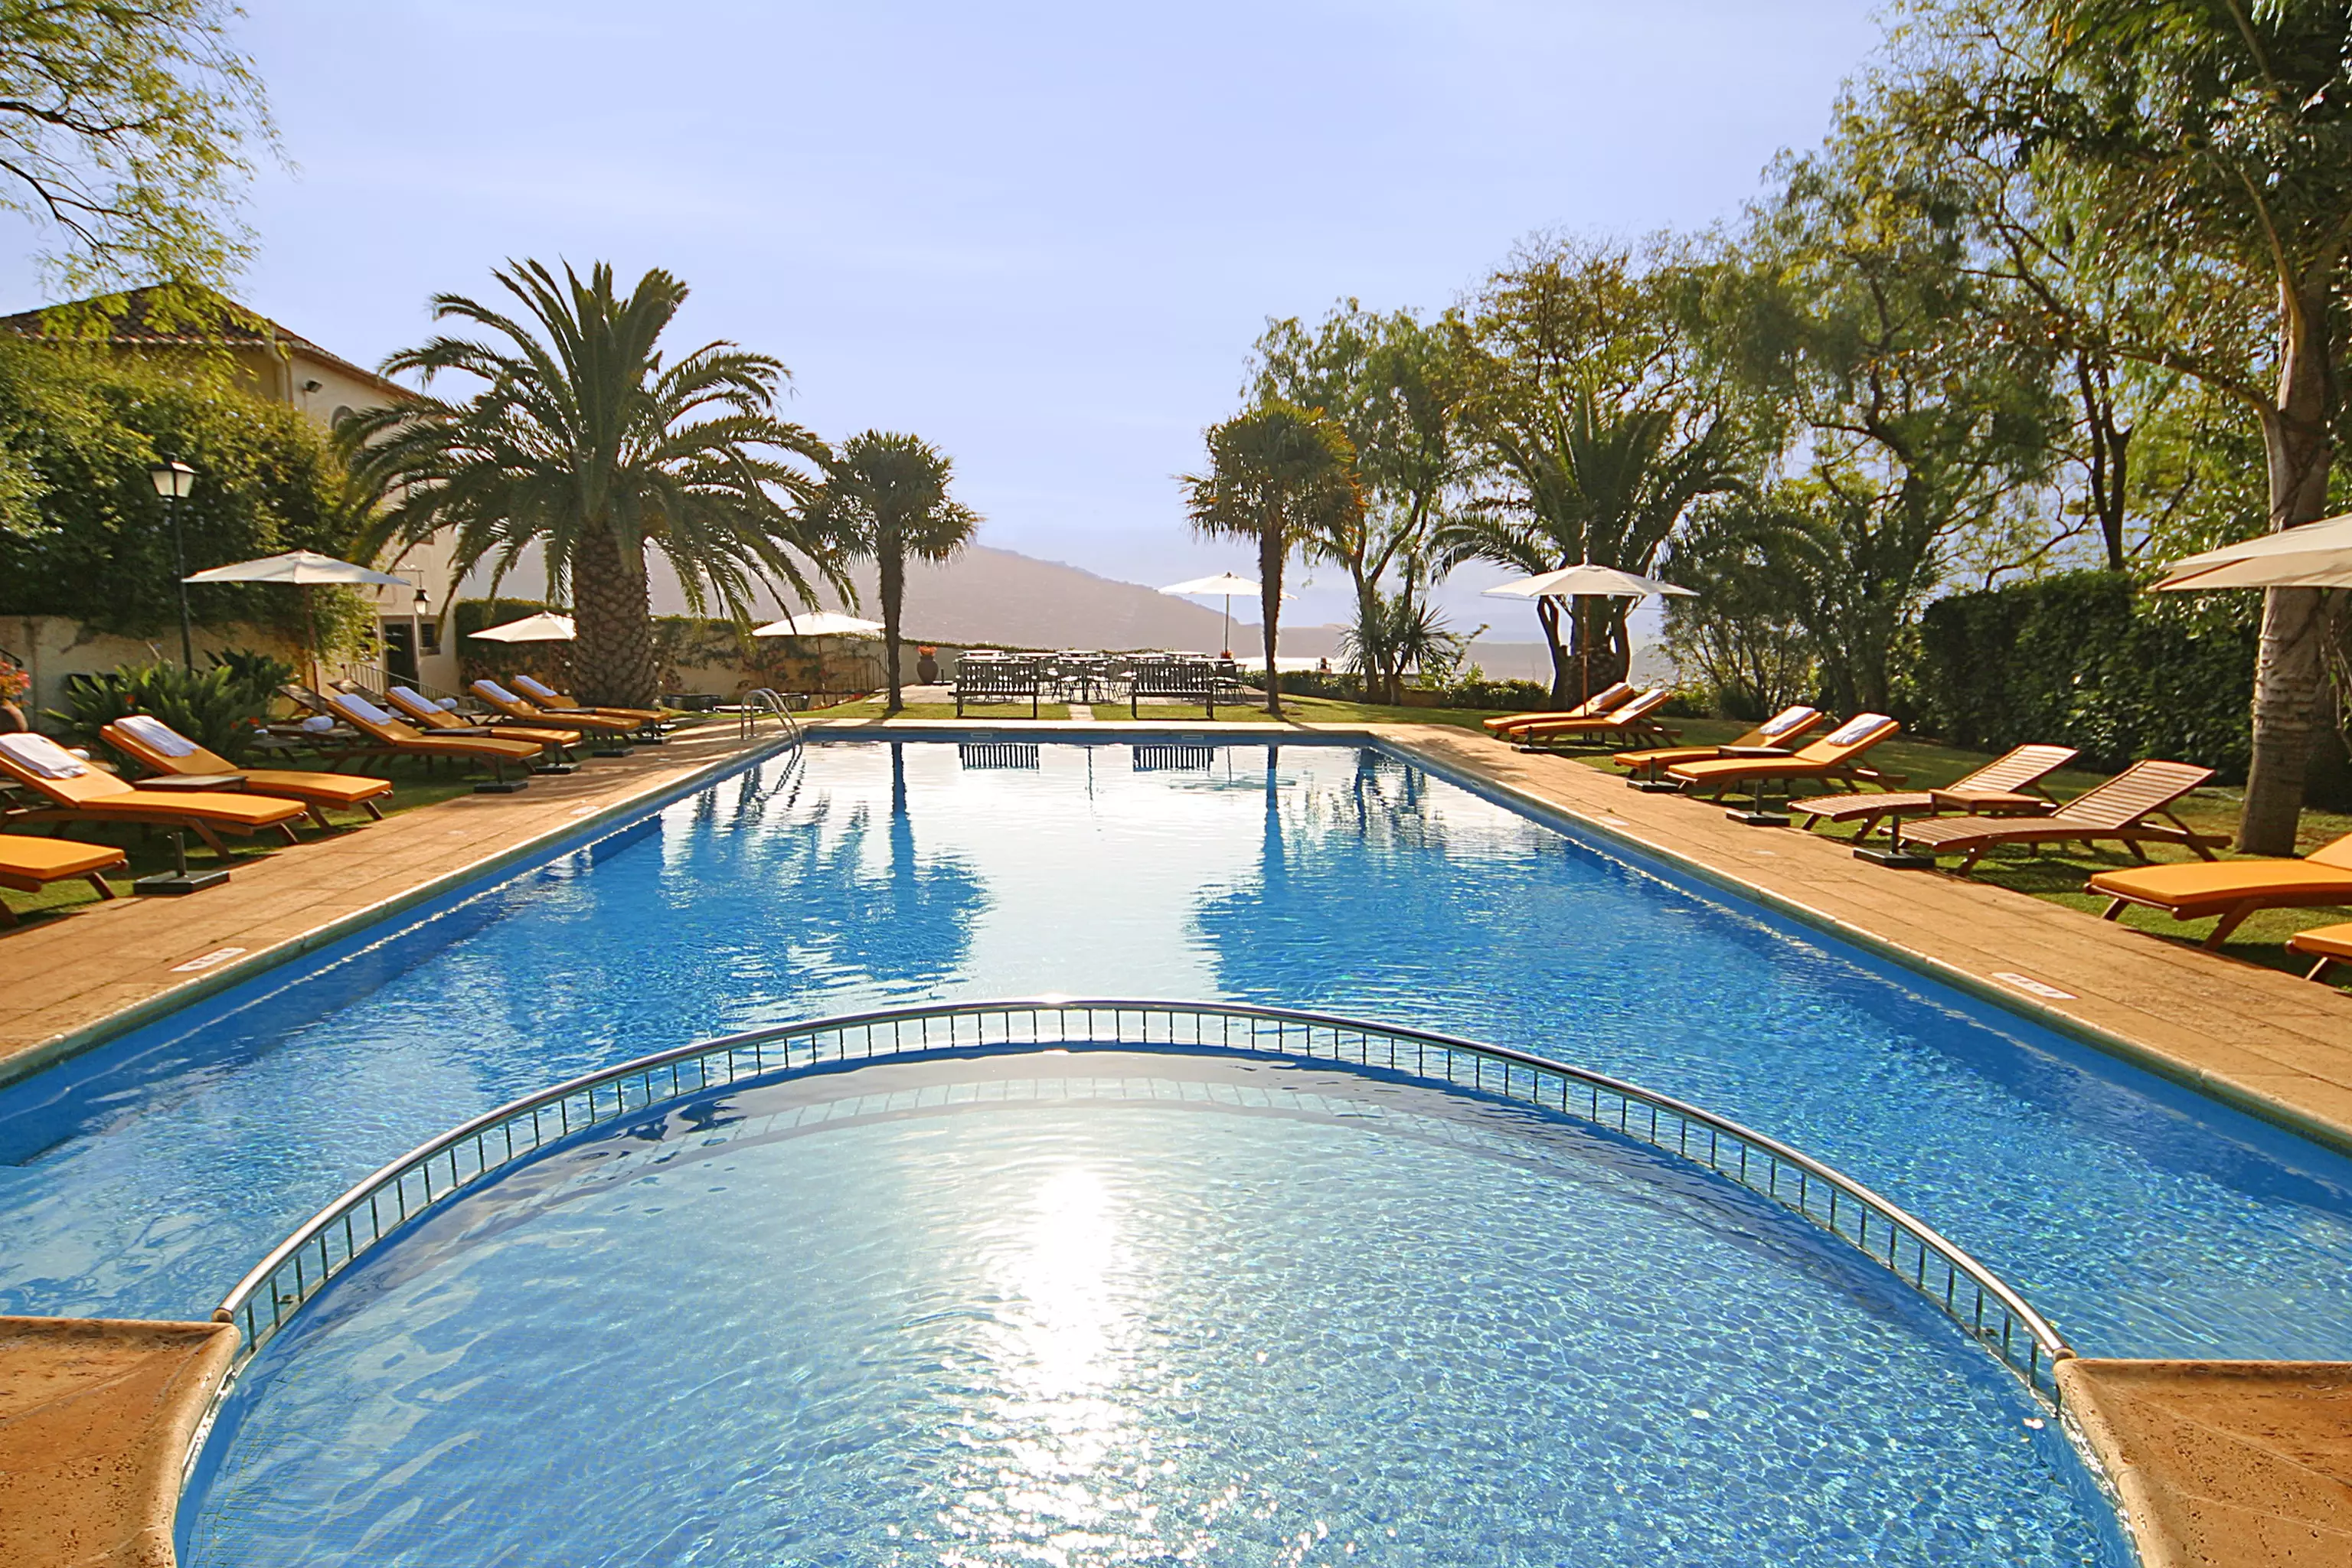 The resort's heated outdoor pool.